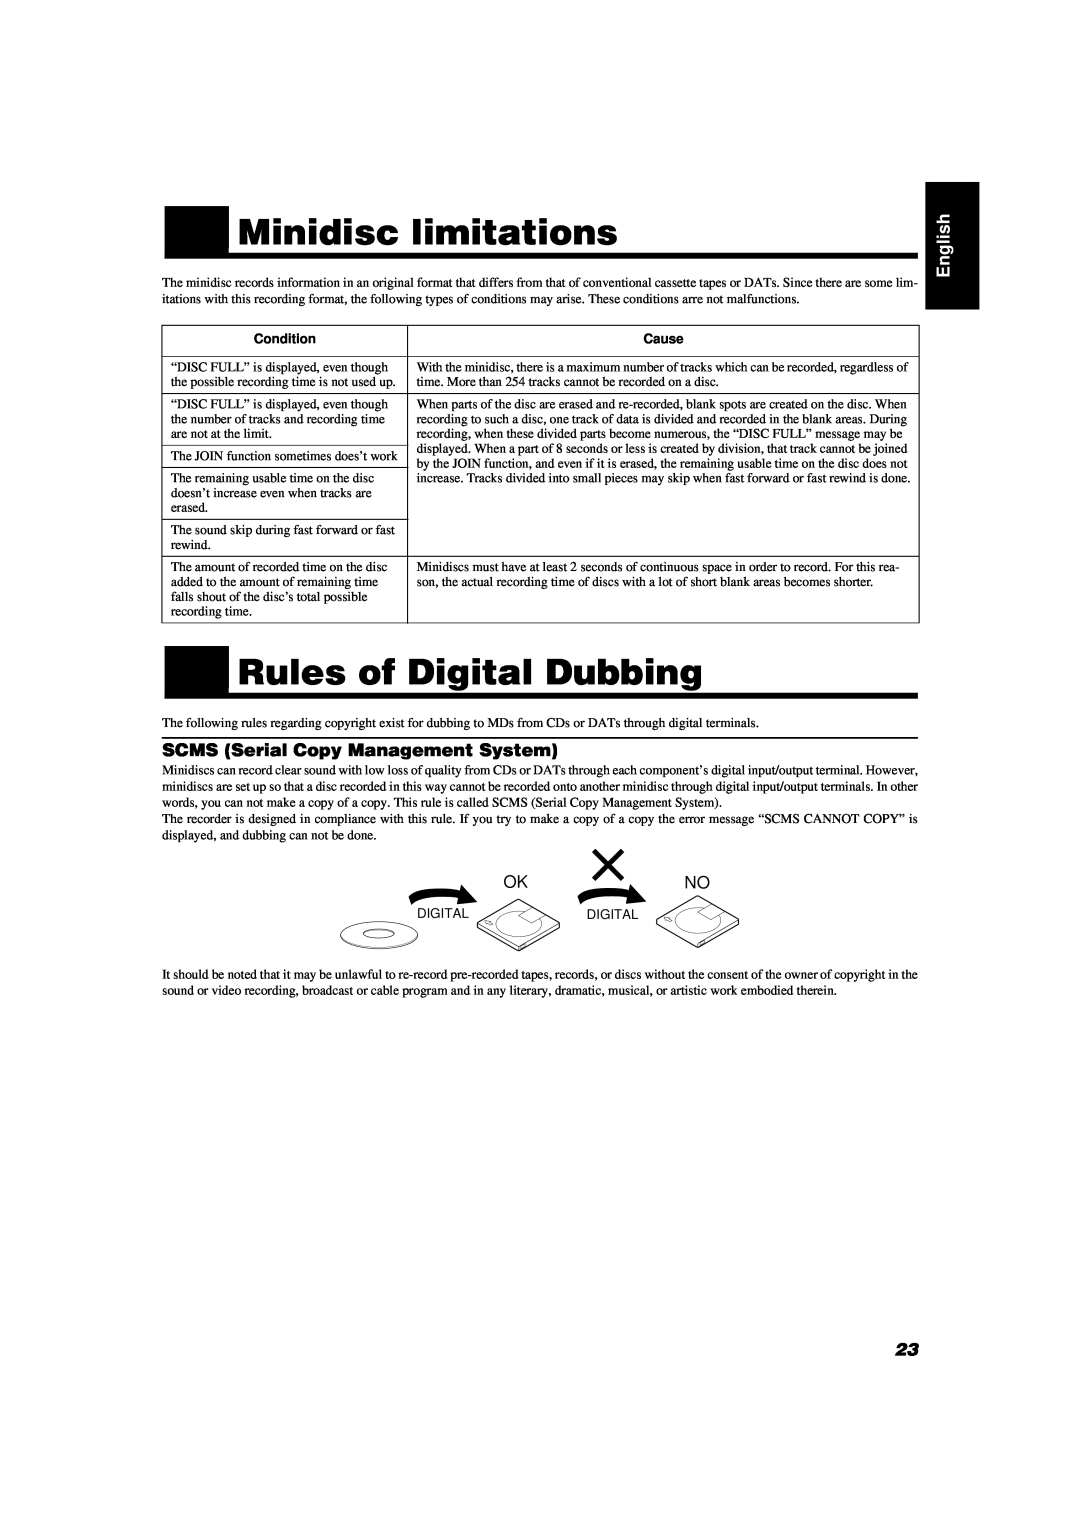 JVC FS-MD9000 manual Minidisc limitations, Rules of Digital Dubbing, SCMS Serial Copy Management System, Okno, English 